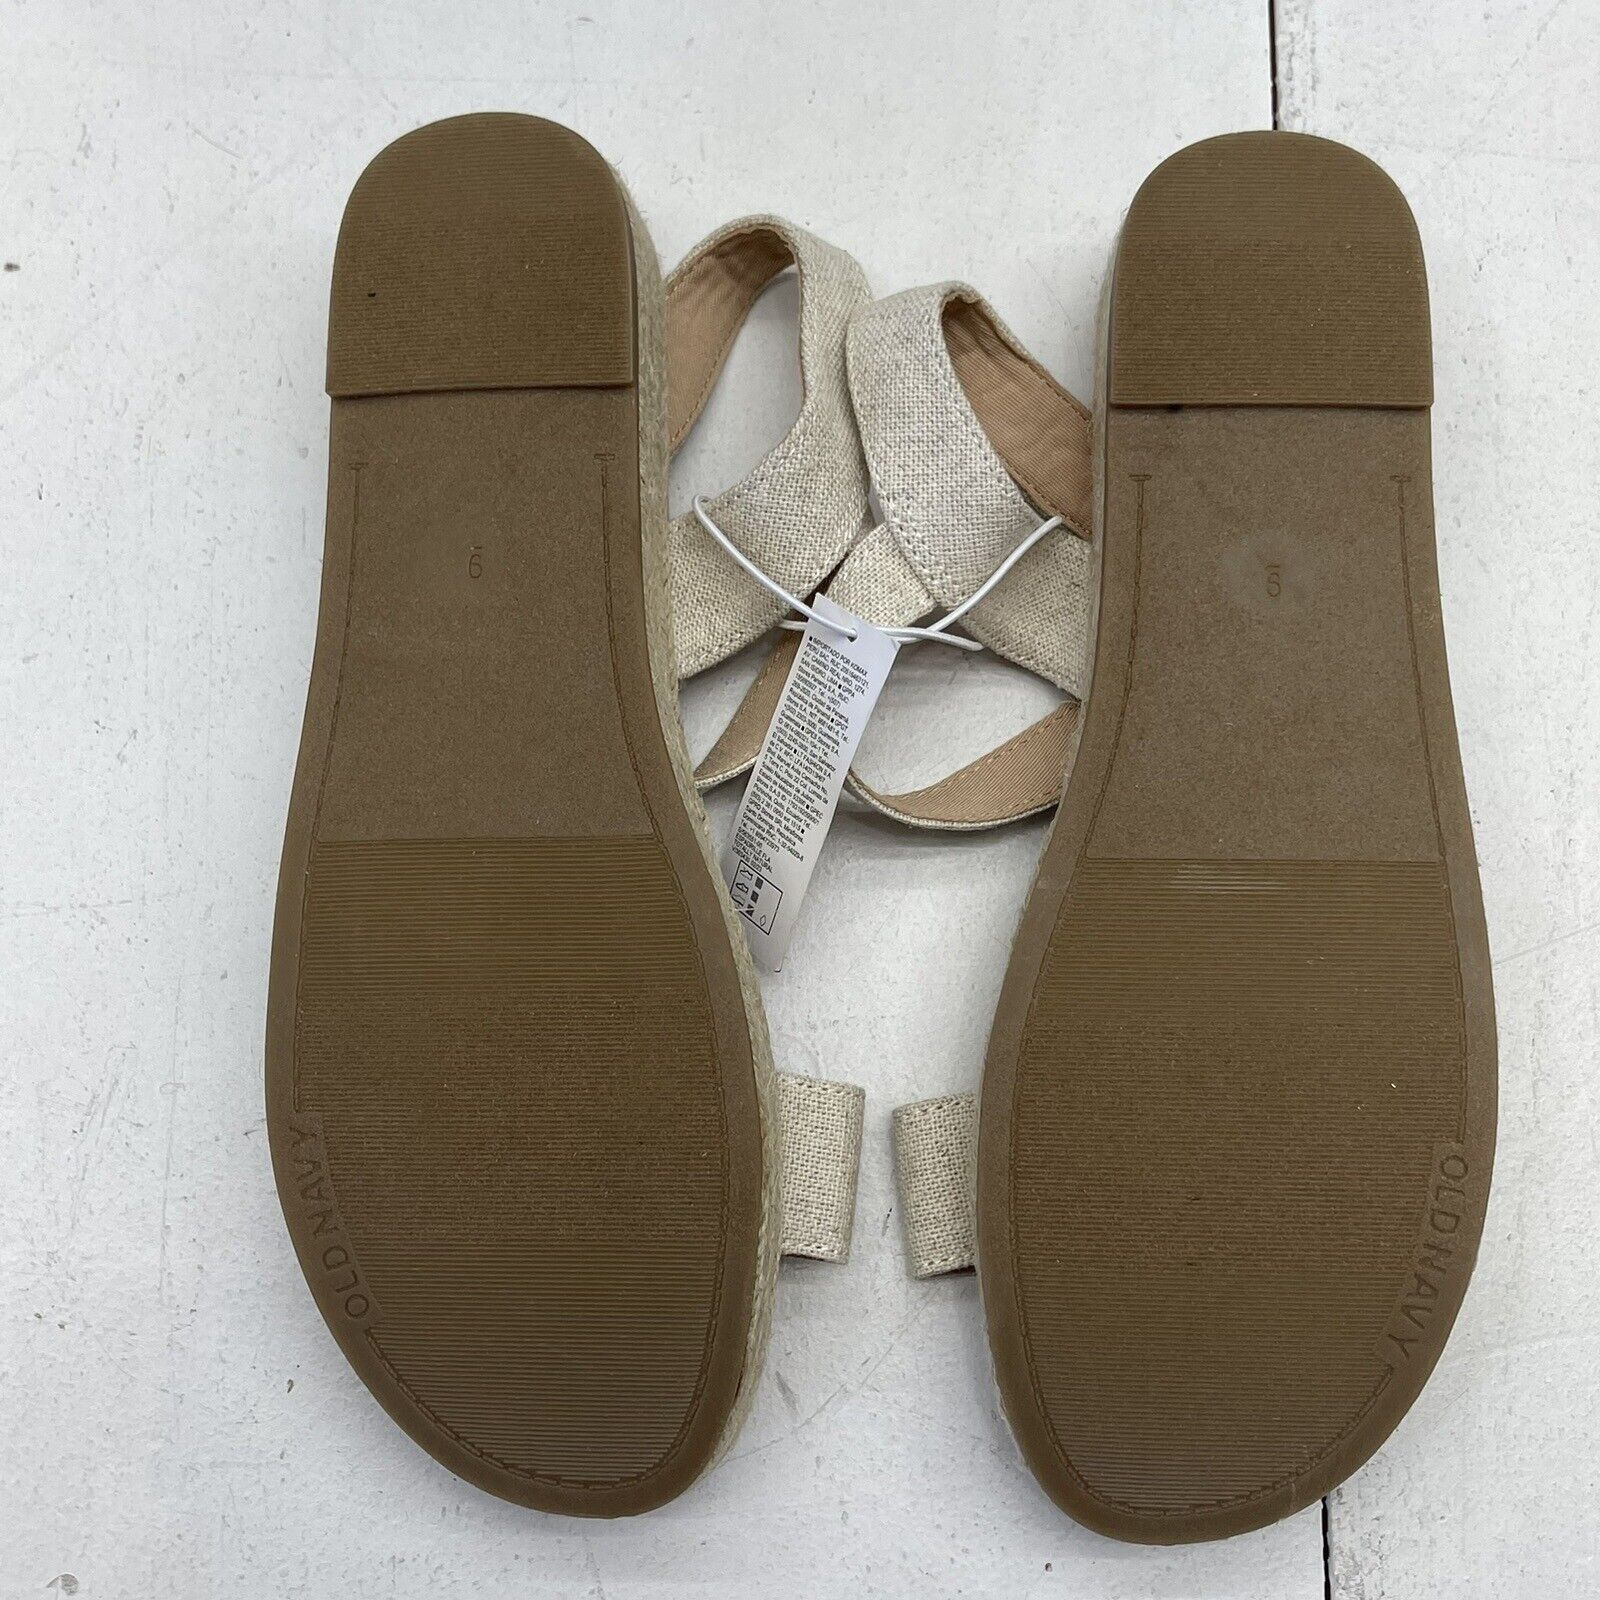 Platform Flip Flops for Women Size 9 Women's Fashion Slippers